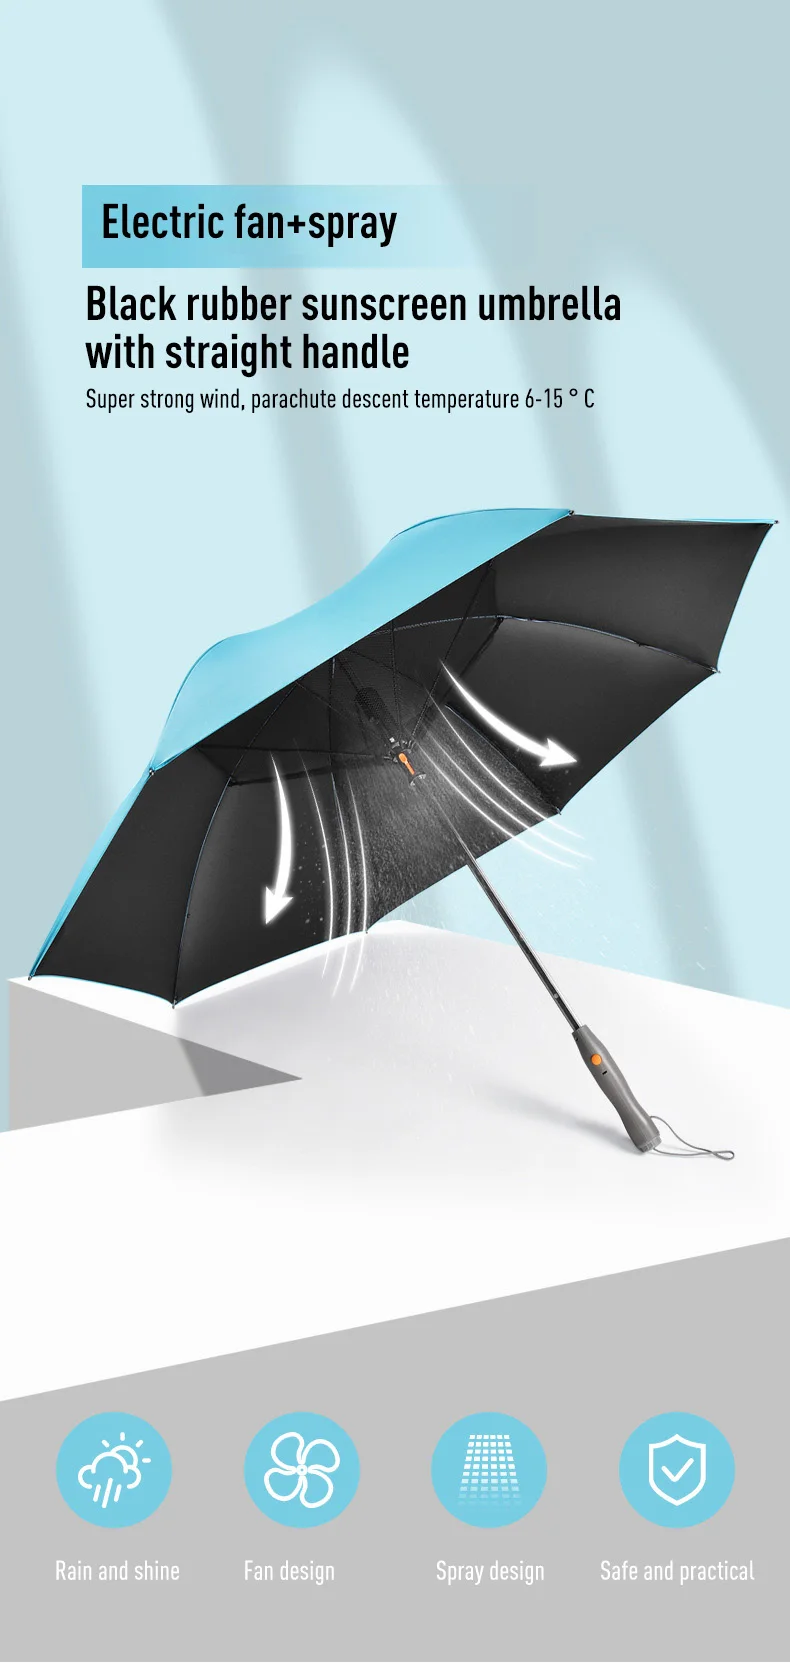 Hot Sale popular umbrella with fan and water spray Special Waterproof Solar Mist Fan Straight Uv umbrella with fan for sale